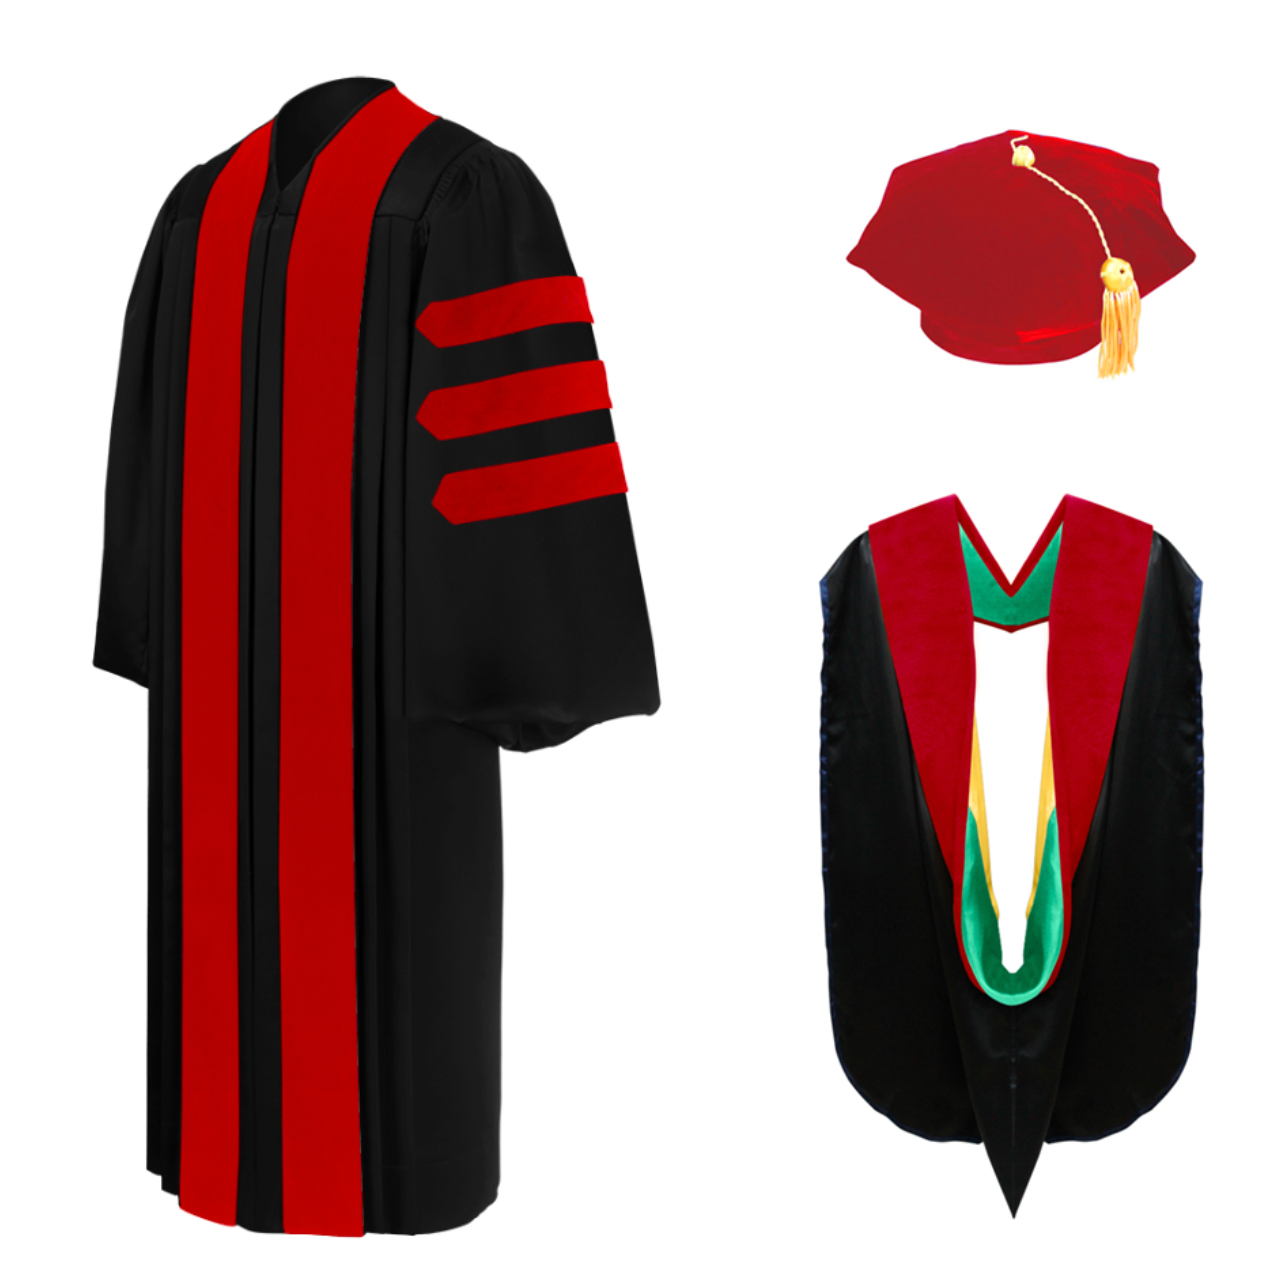 PHD Graduation Gown and Hood| Alibaba.com